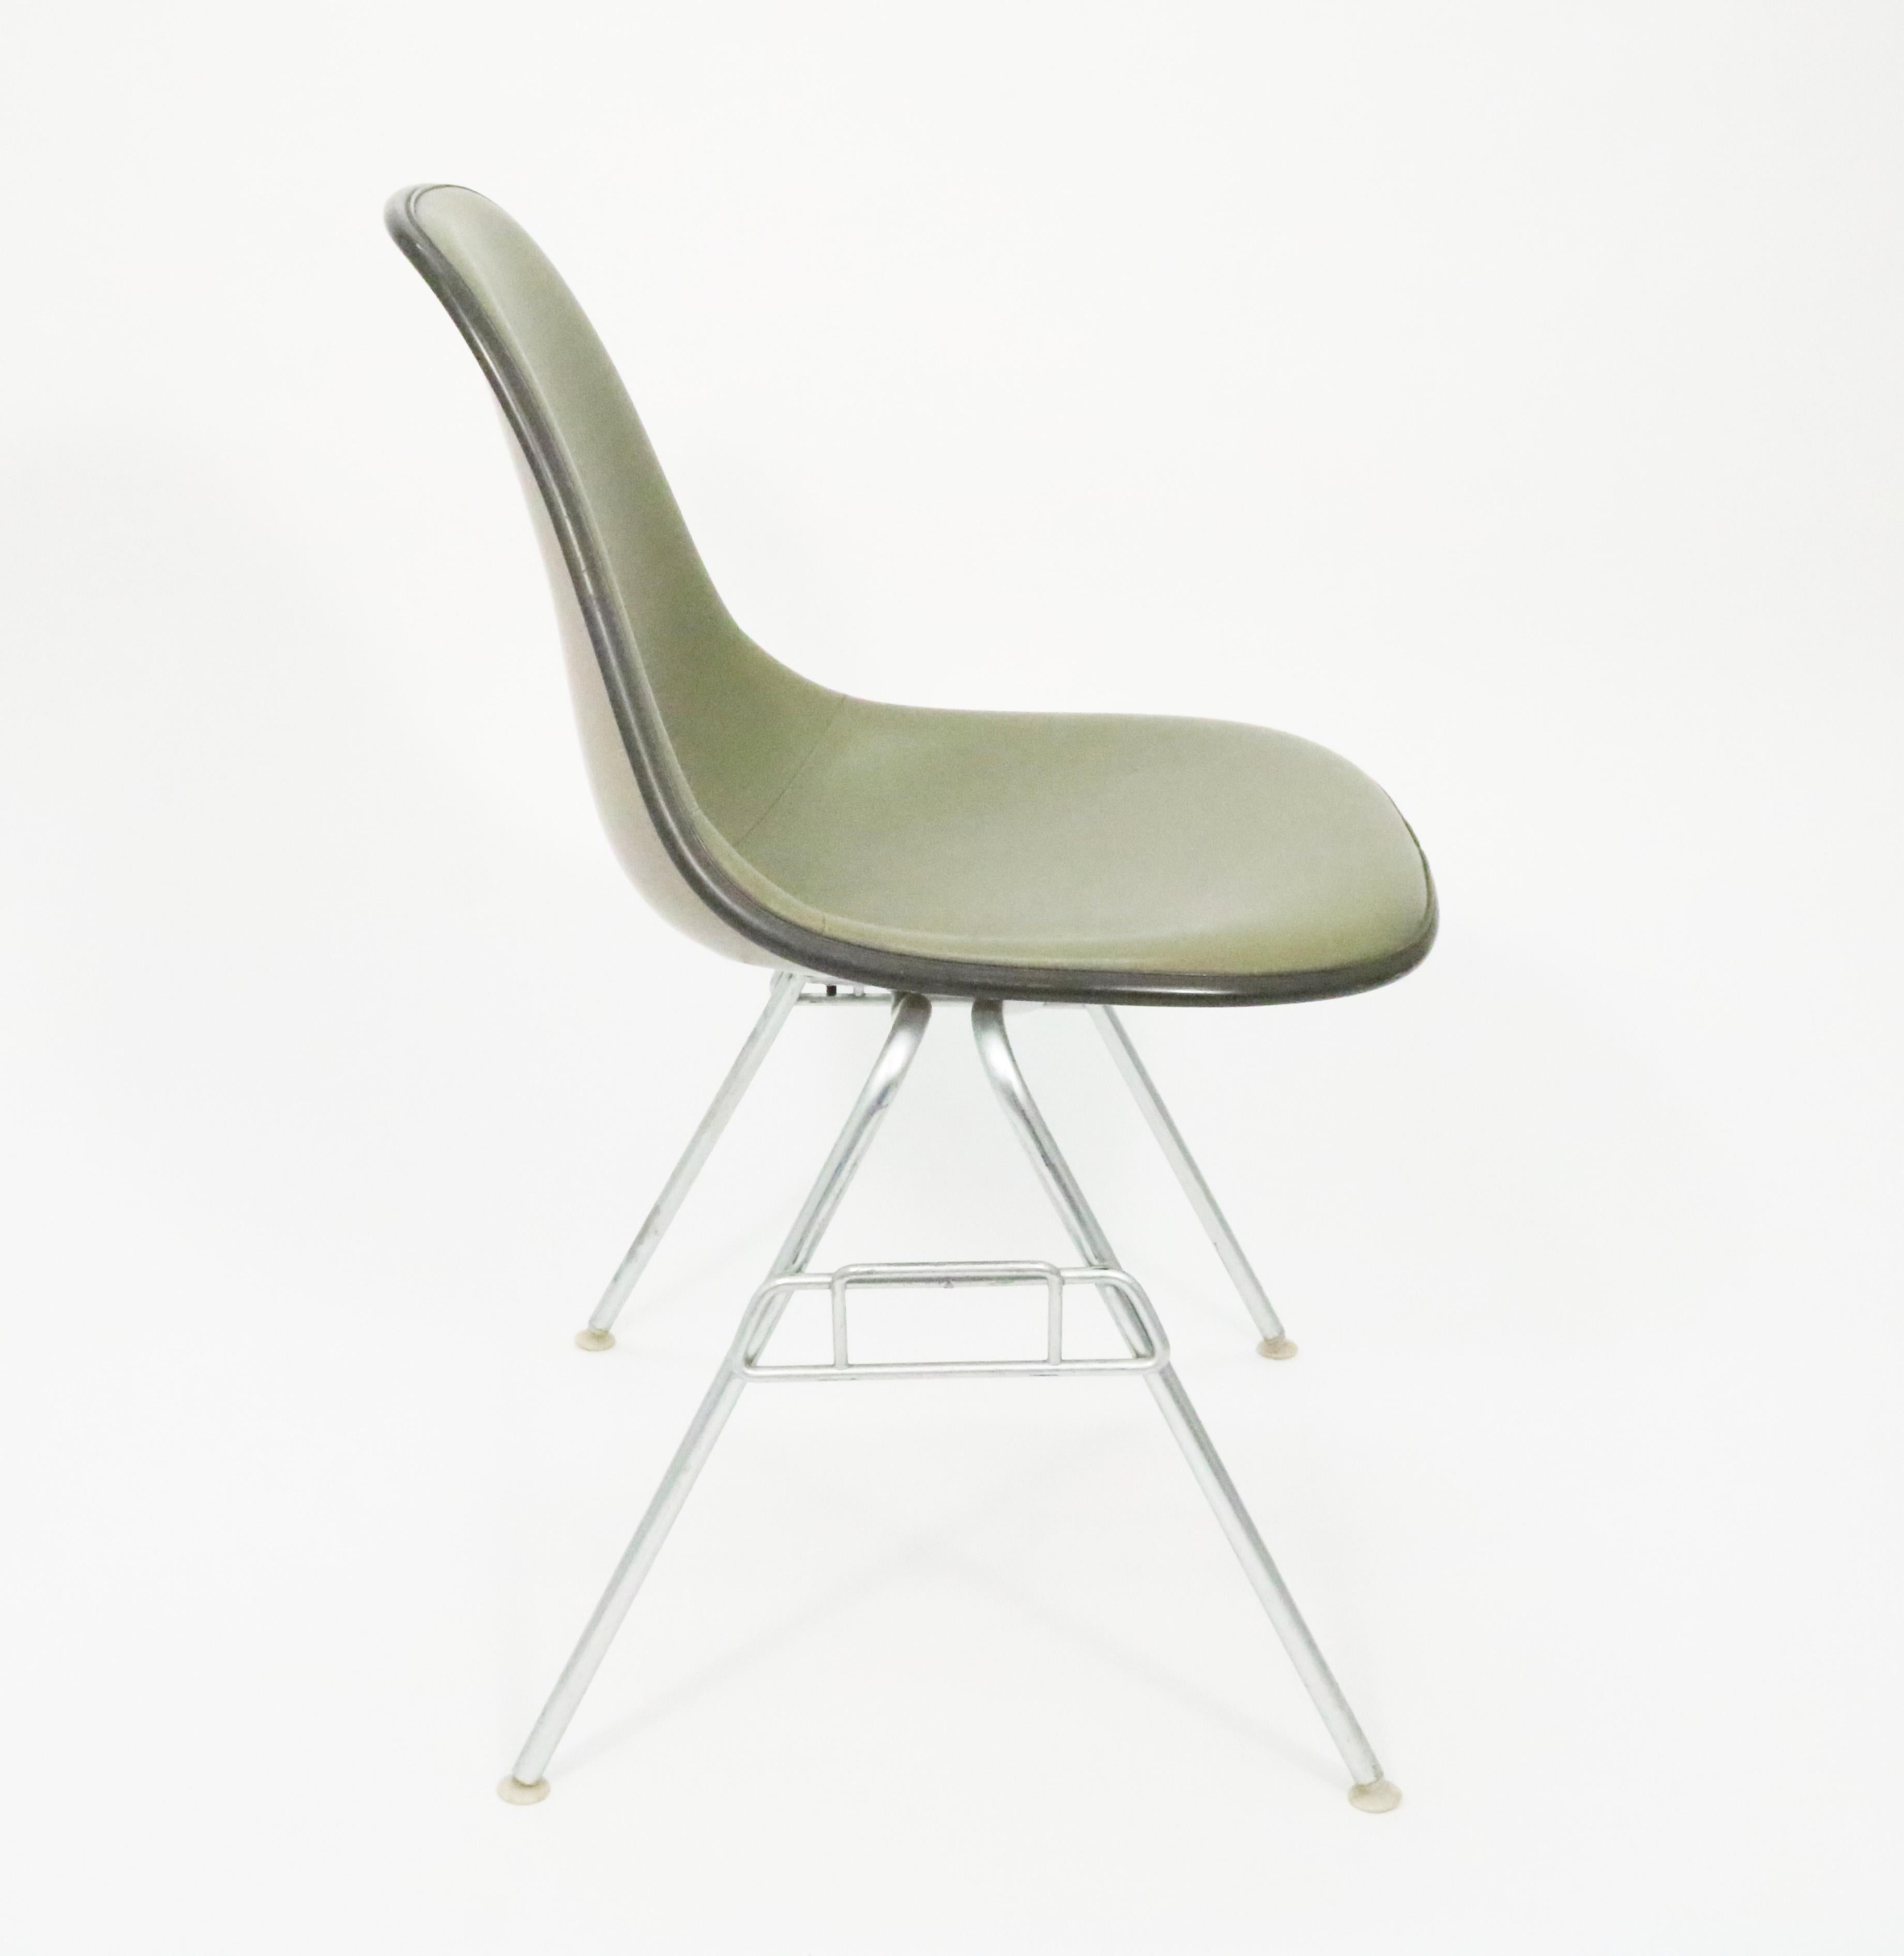 Mid-Century Modern Eames for Herman Miller Fiberglass Shell Chair, Green on Stackable Base